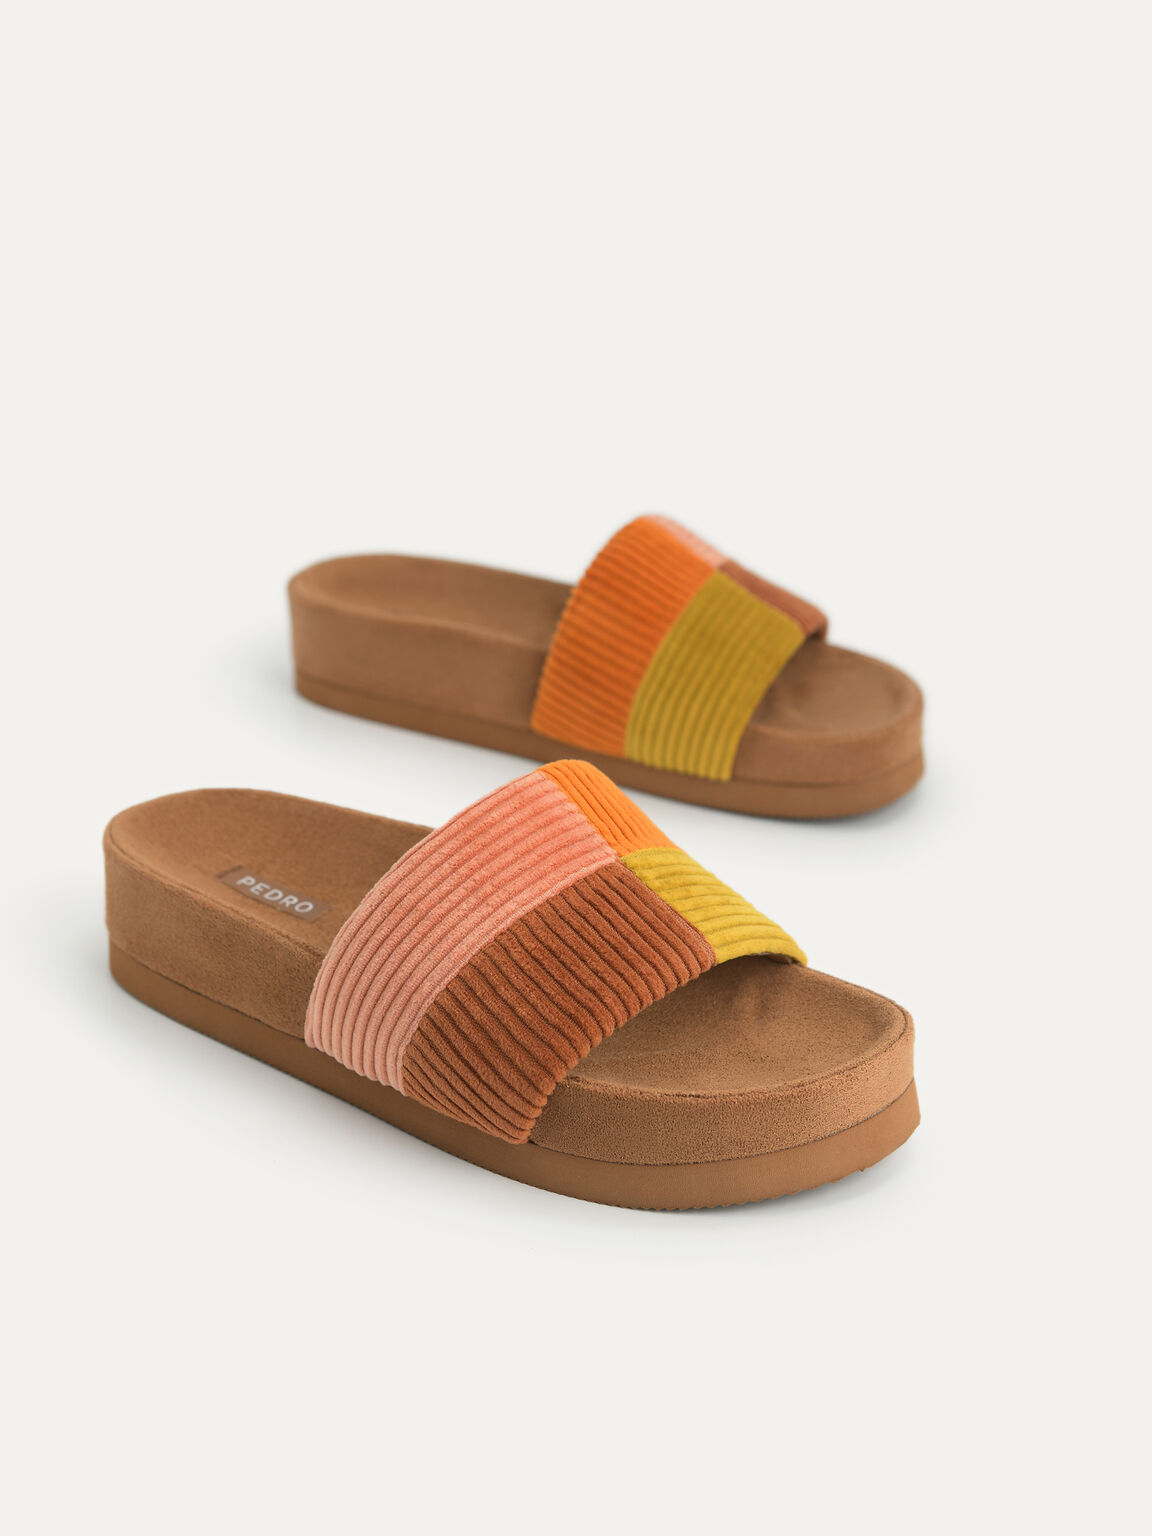 Corduroy Flatform Sandals, Multi, hi-res